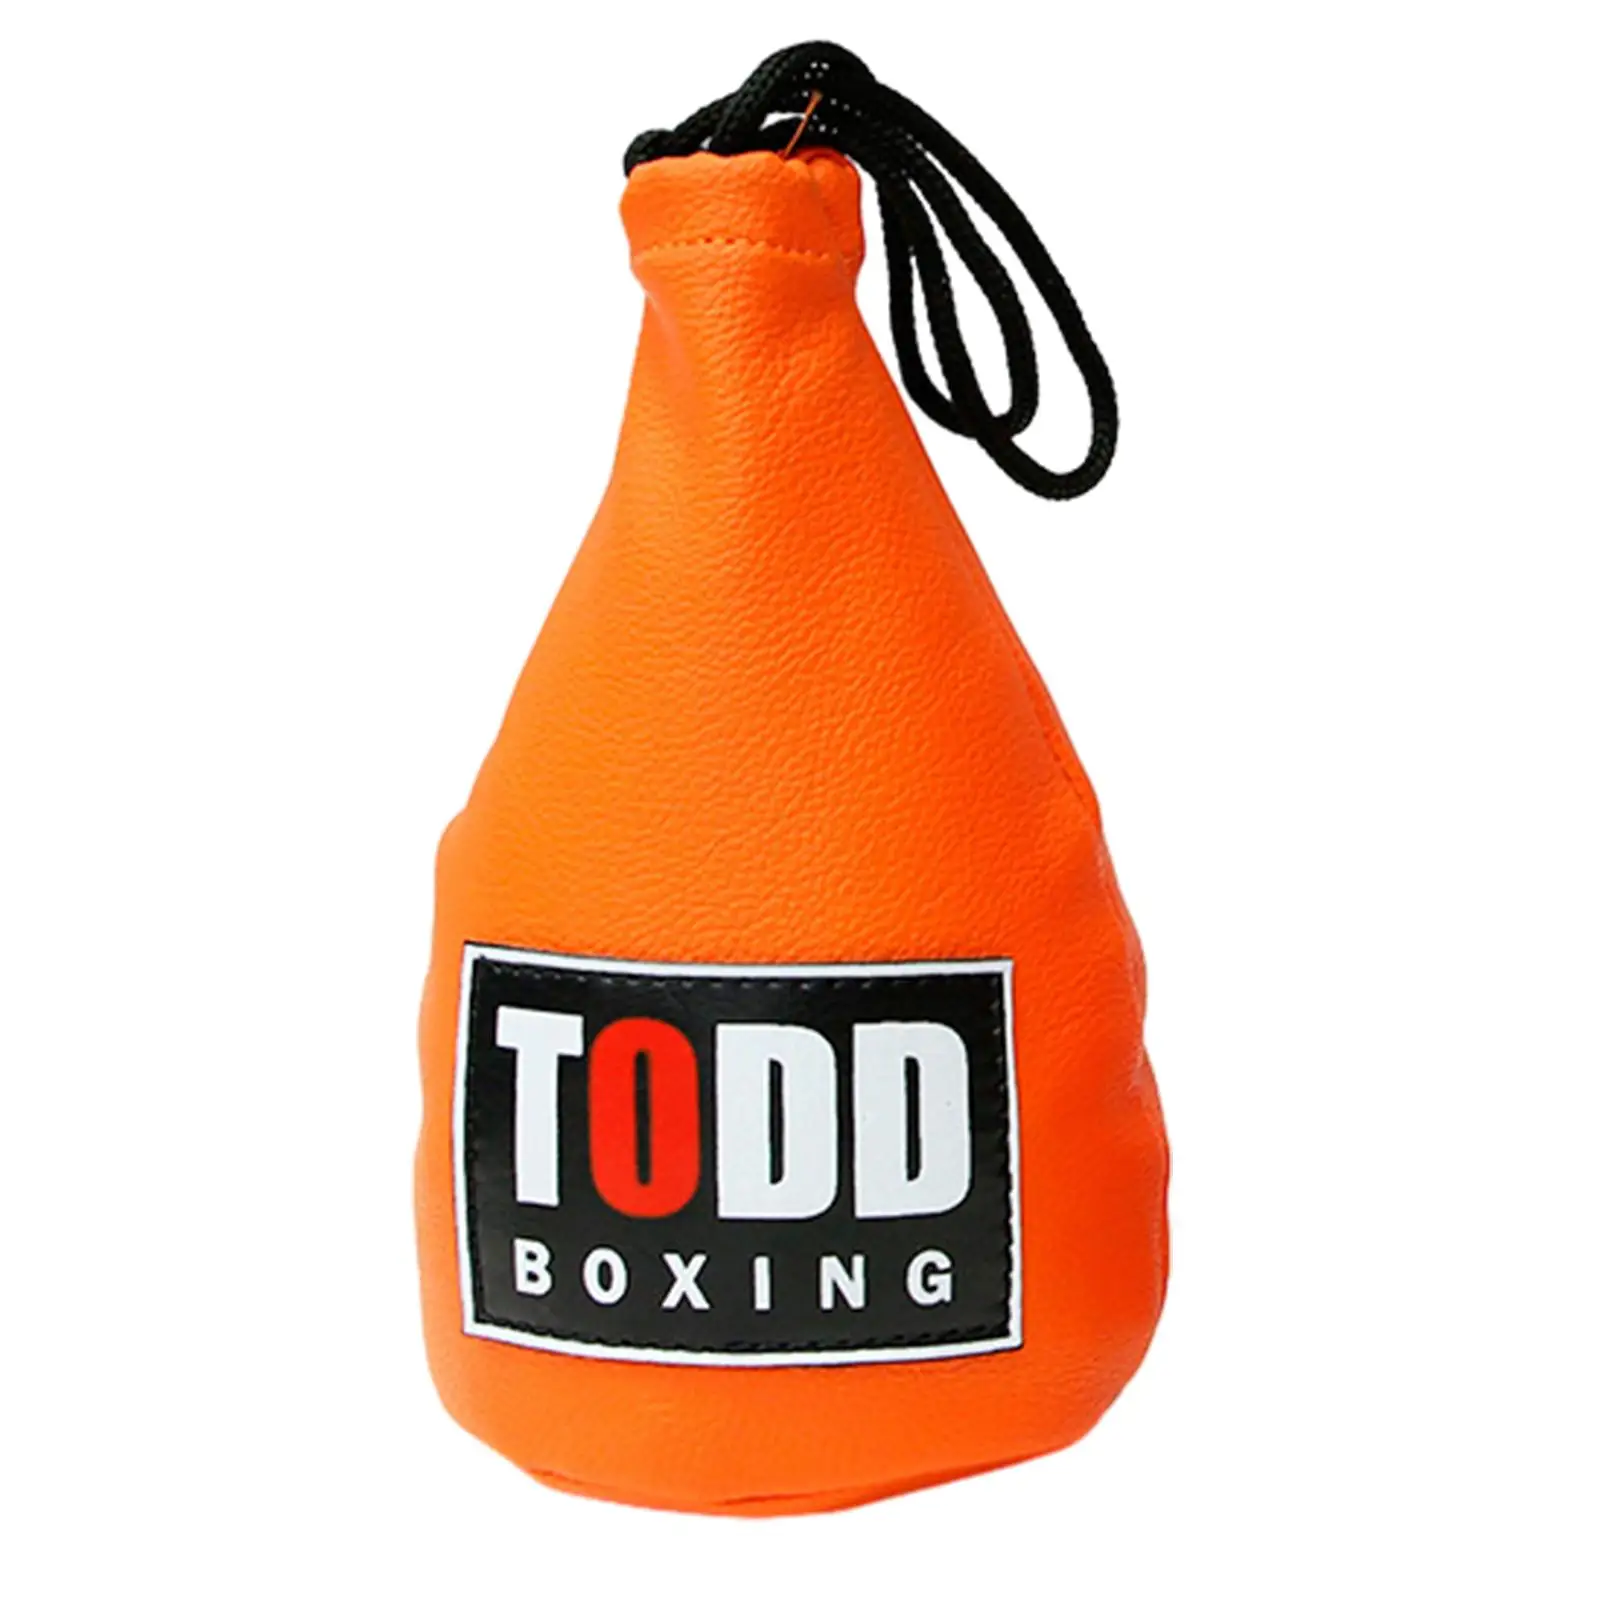 Dodge Reaction Bag Mma Pendulum Training Boxing Dodge Training Bag for Punching Speed Agility Fight Skill Kickboxing Workout